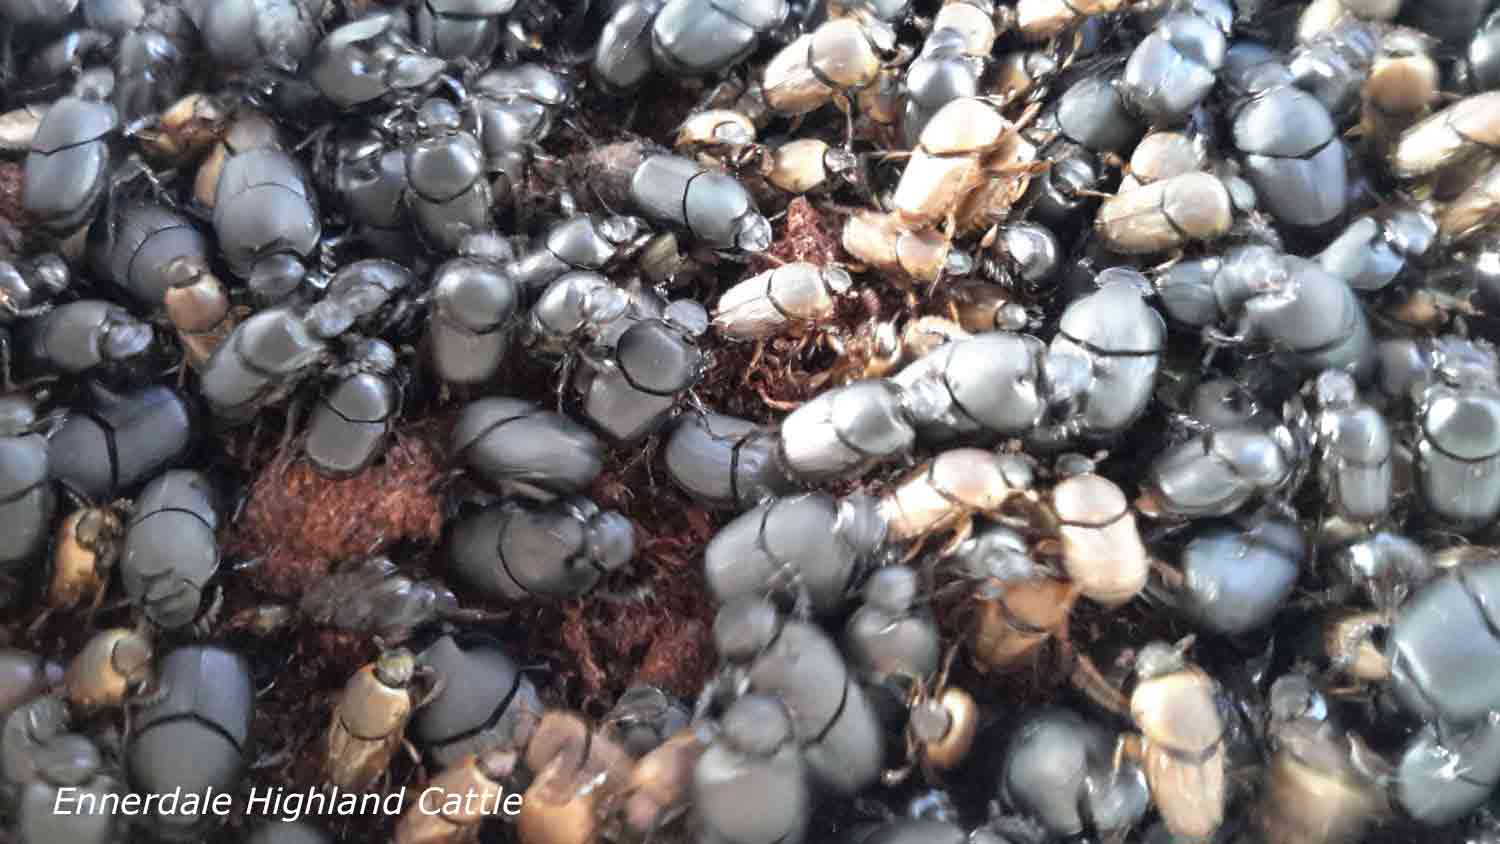 Ennerdale Highland Cattle - Dung Beetles